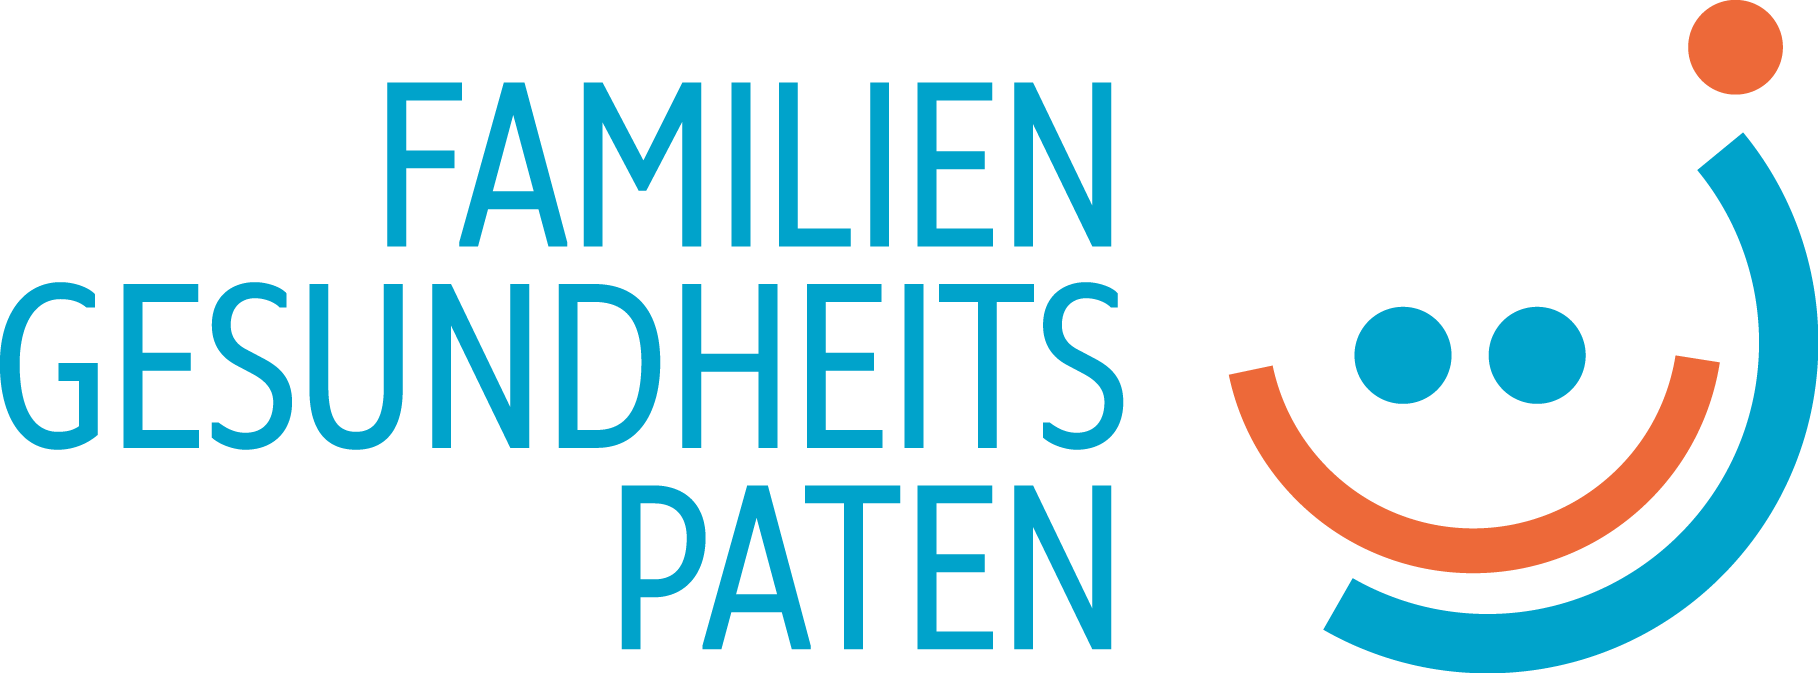 Familien Gesundheits Paten Logo